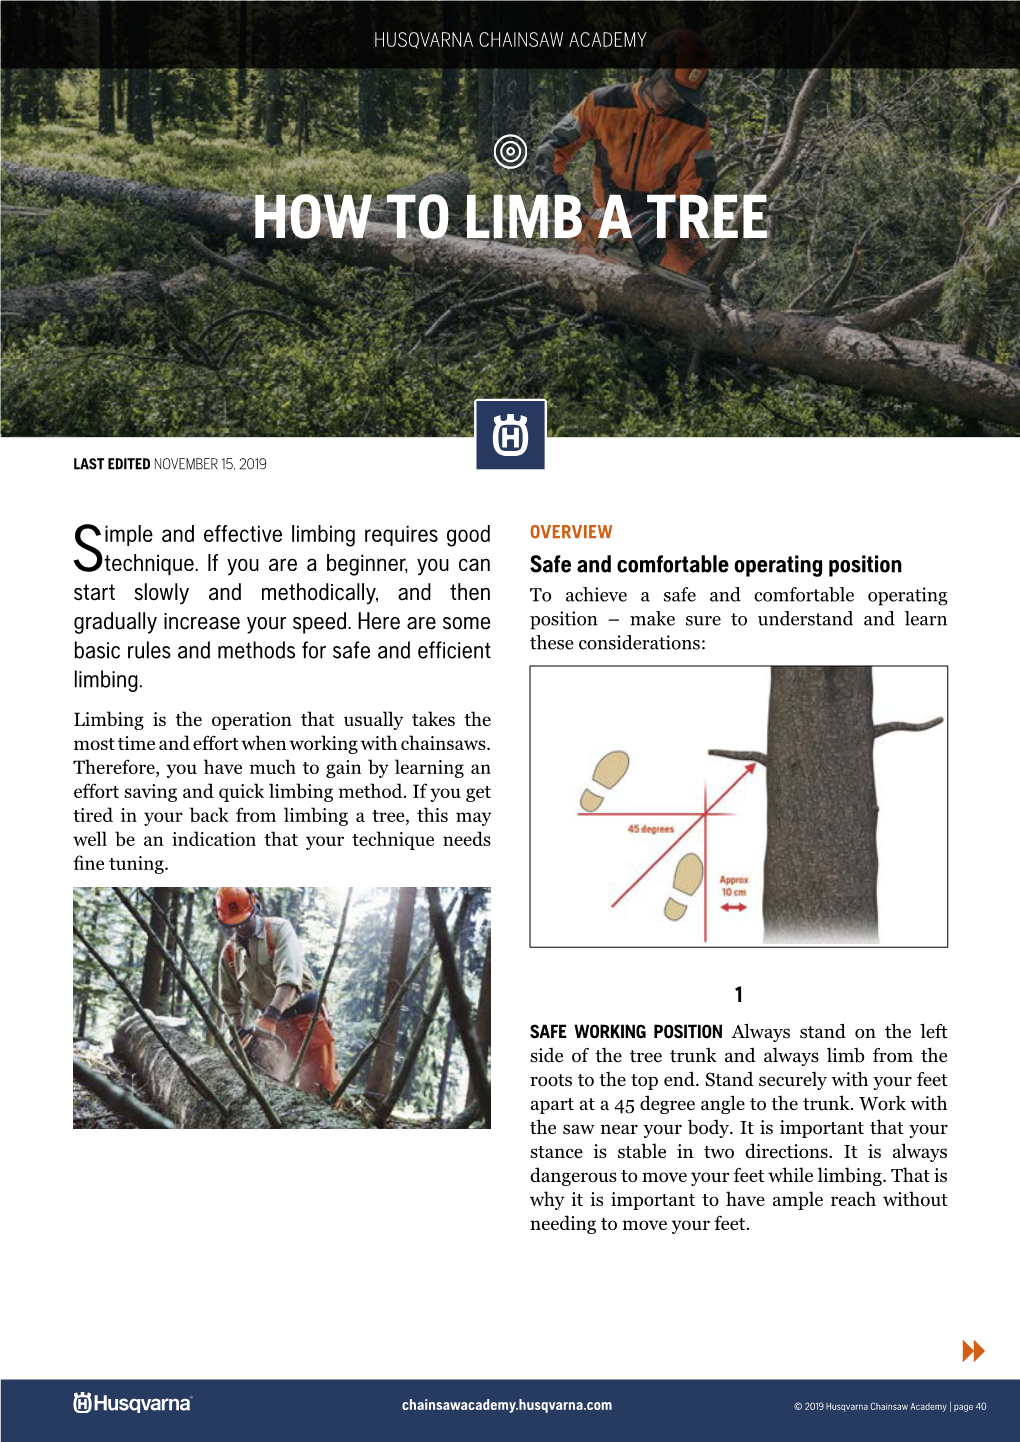 How to Limb a Tree